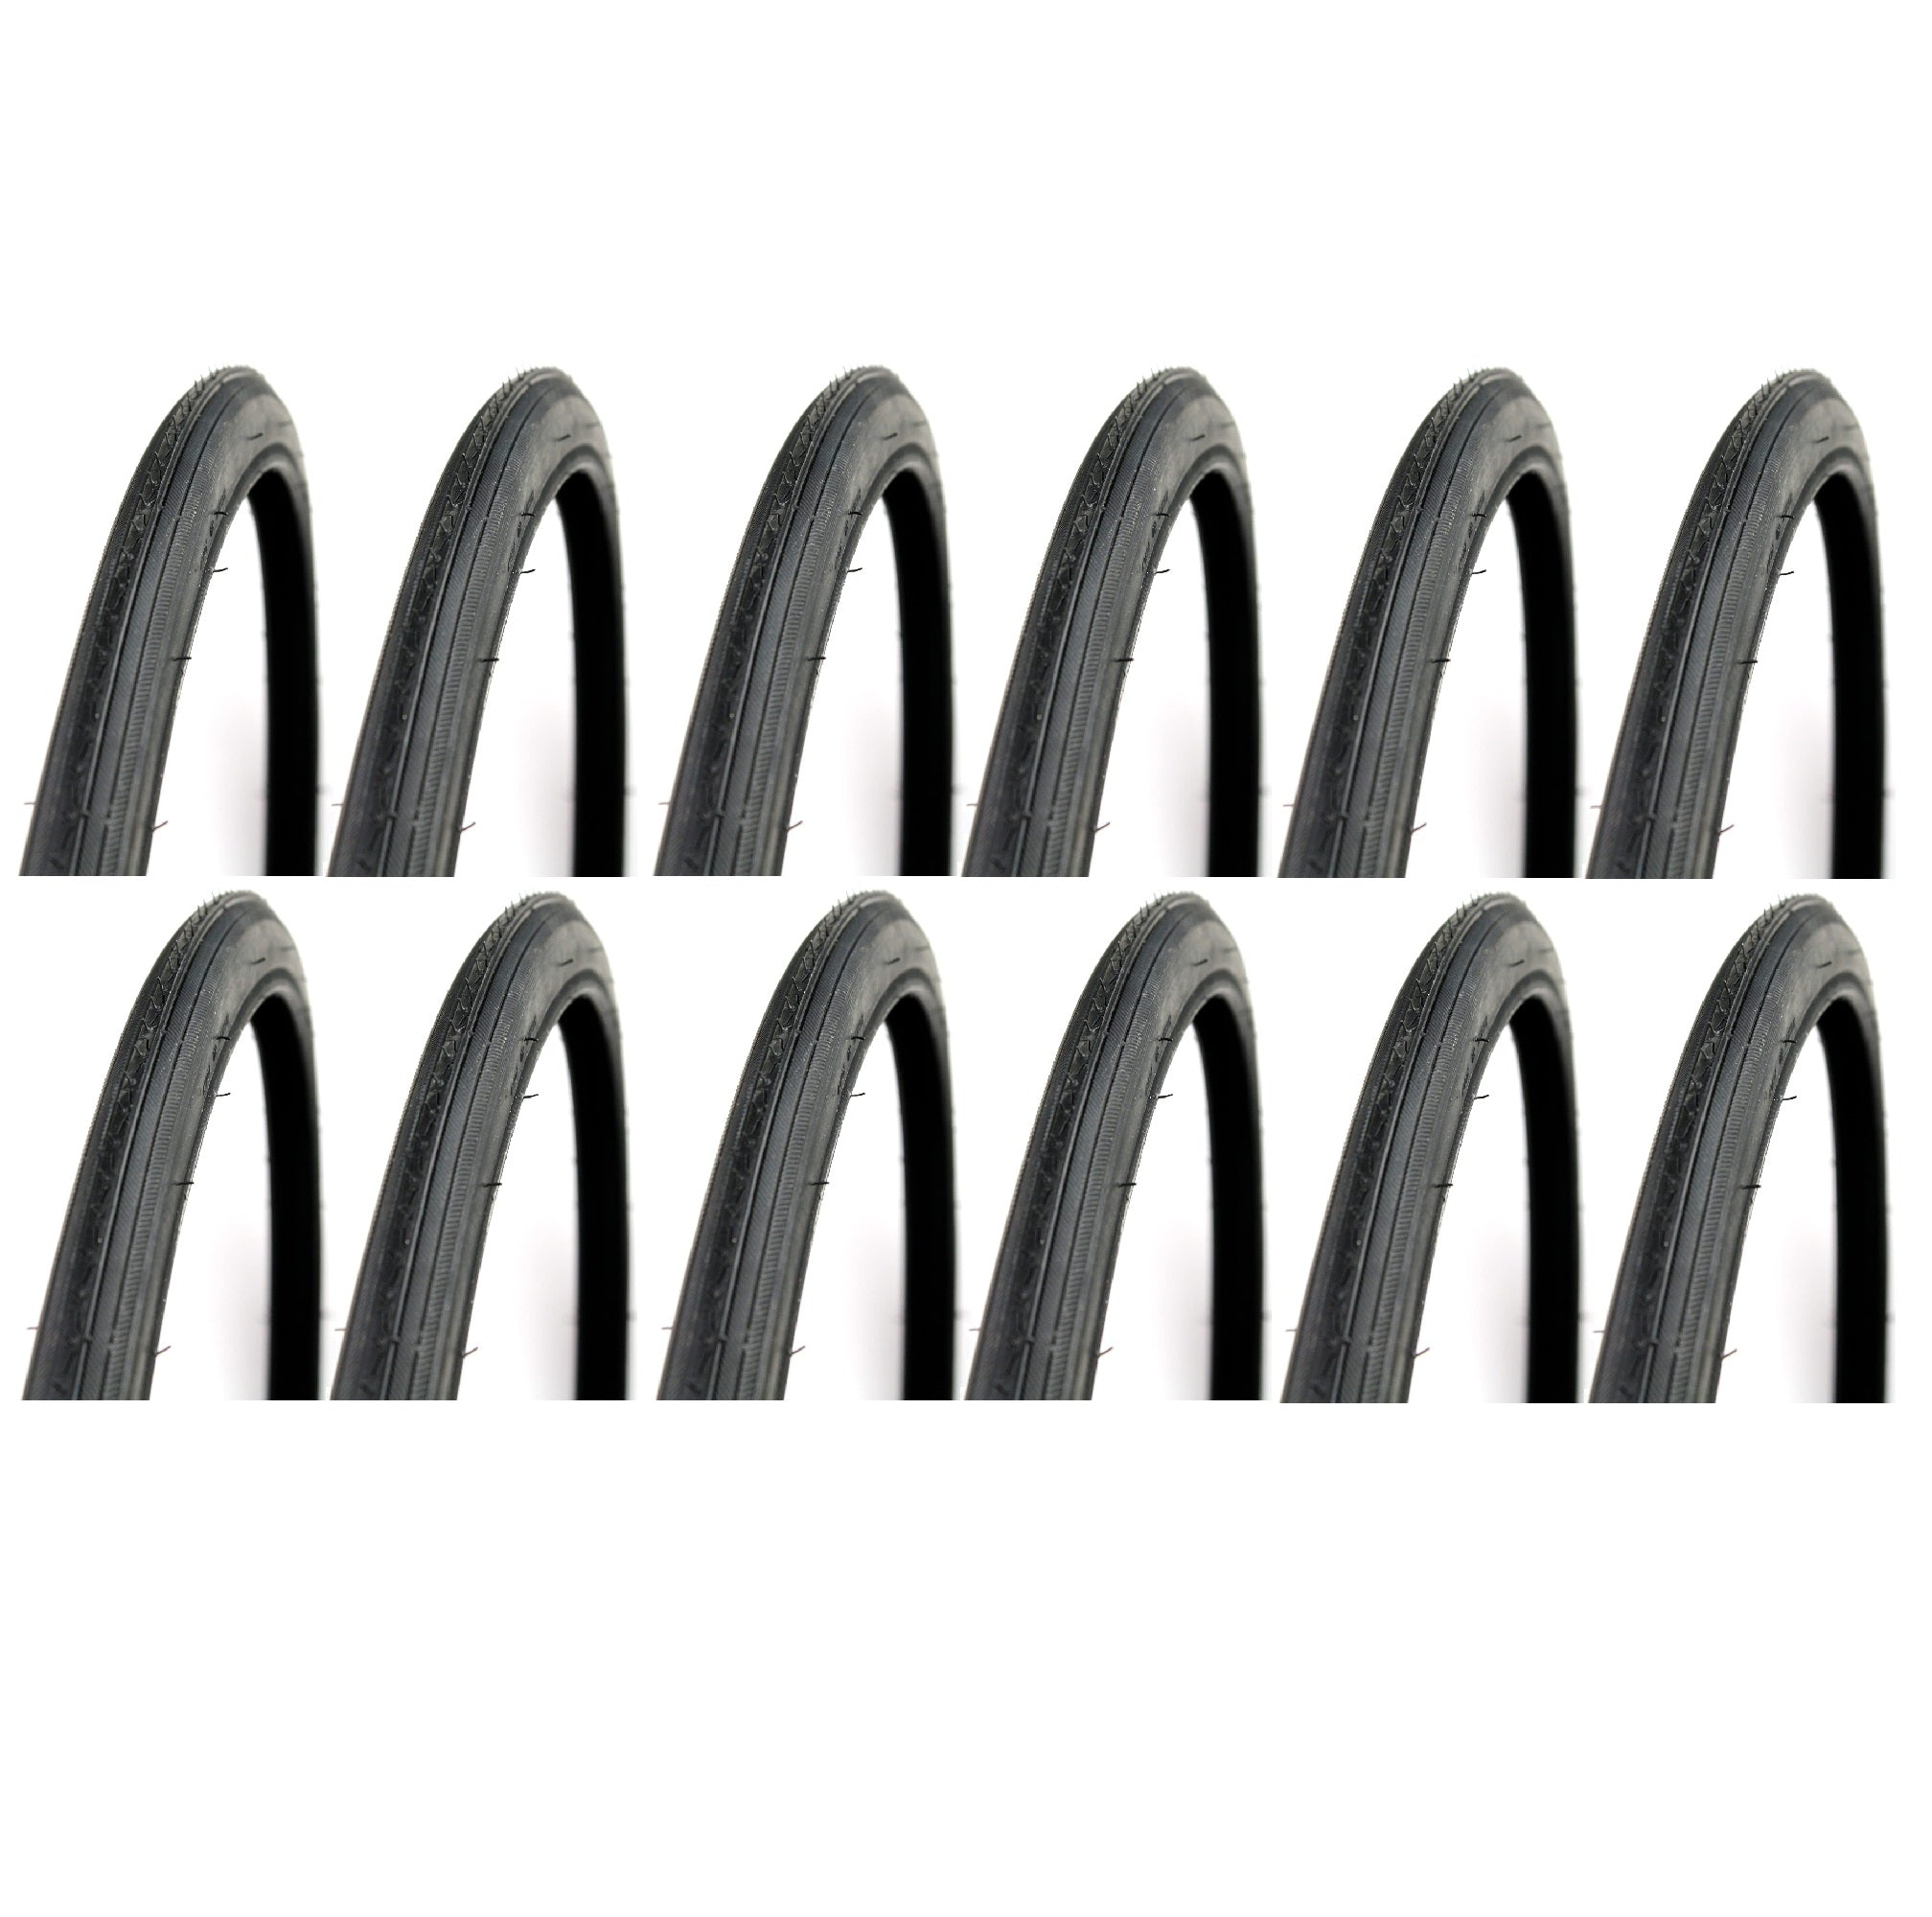 10 Kenda K35 blackwall tires